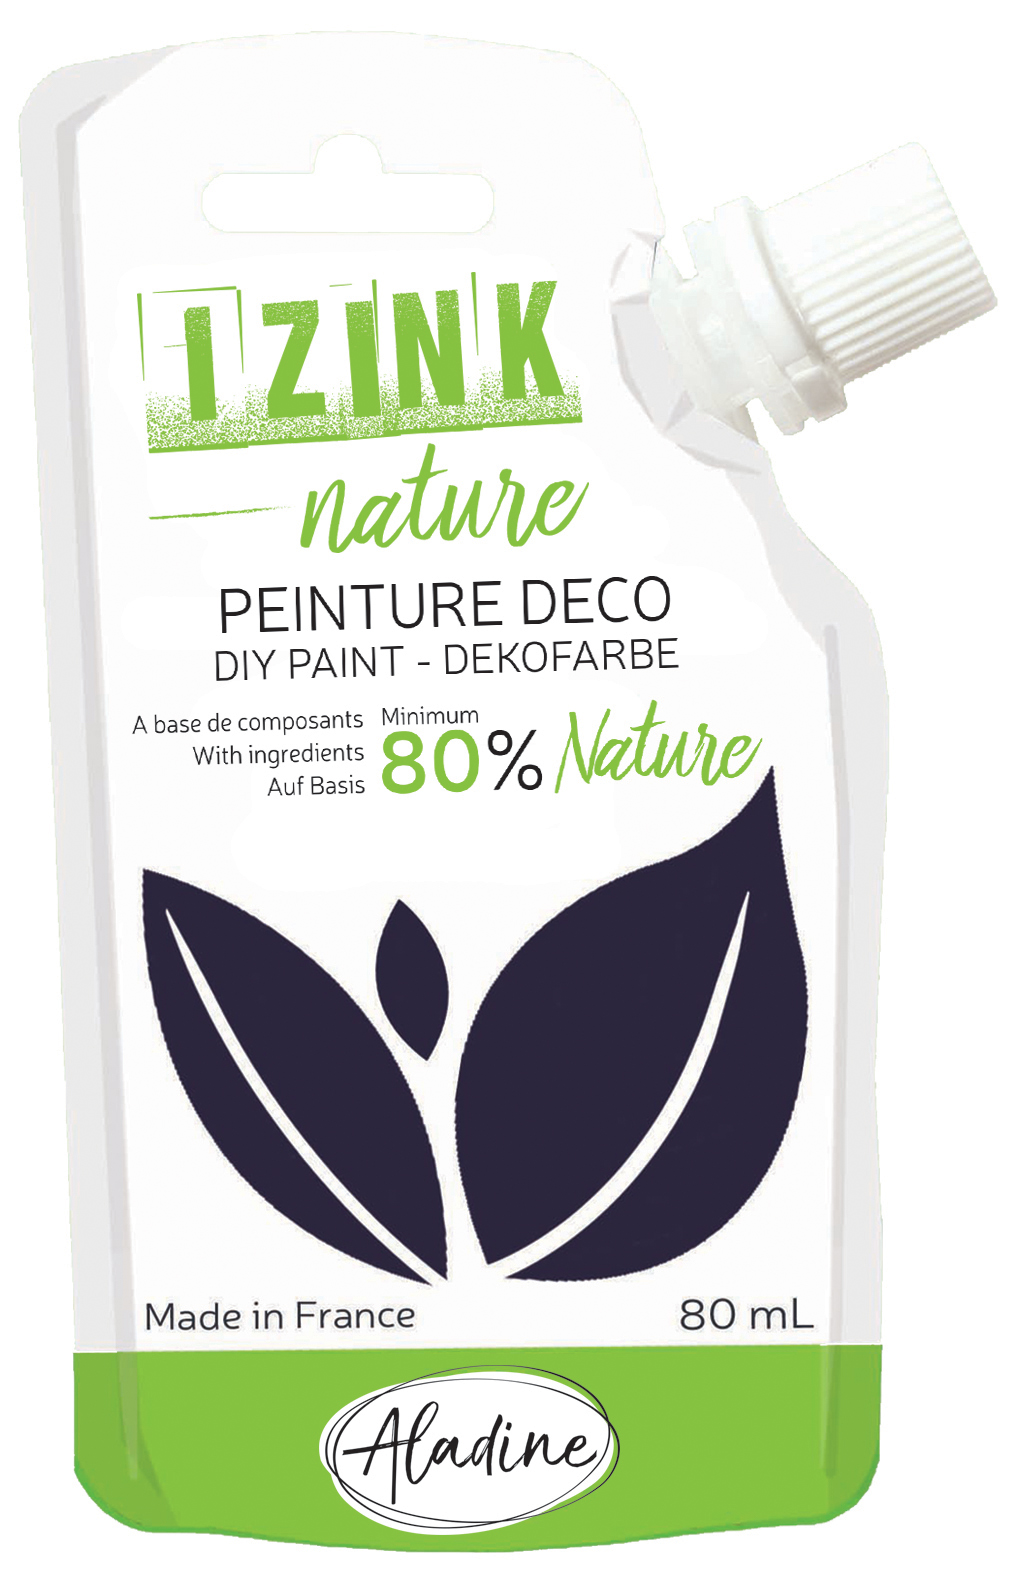 Izink Nature - Natural Deco Paint - Noir ebene (Black) 80ml